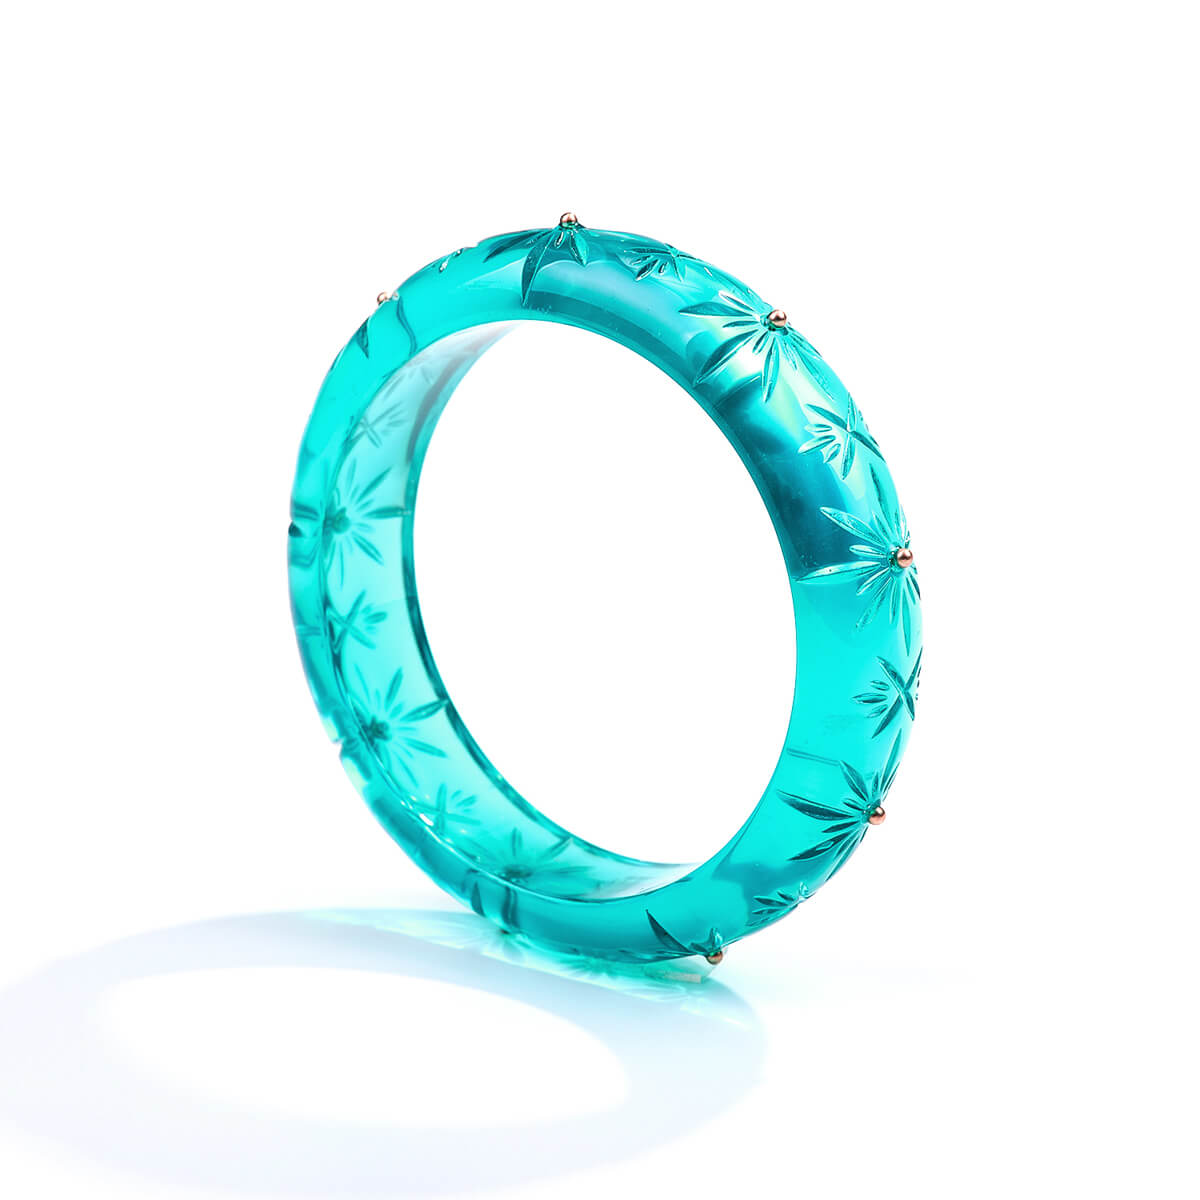 40% OFF Studded Crystal Bangle Turquoise